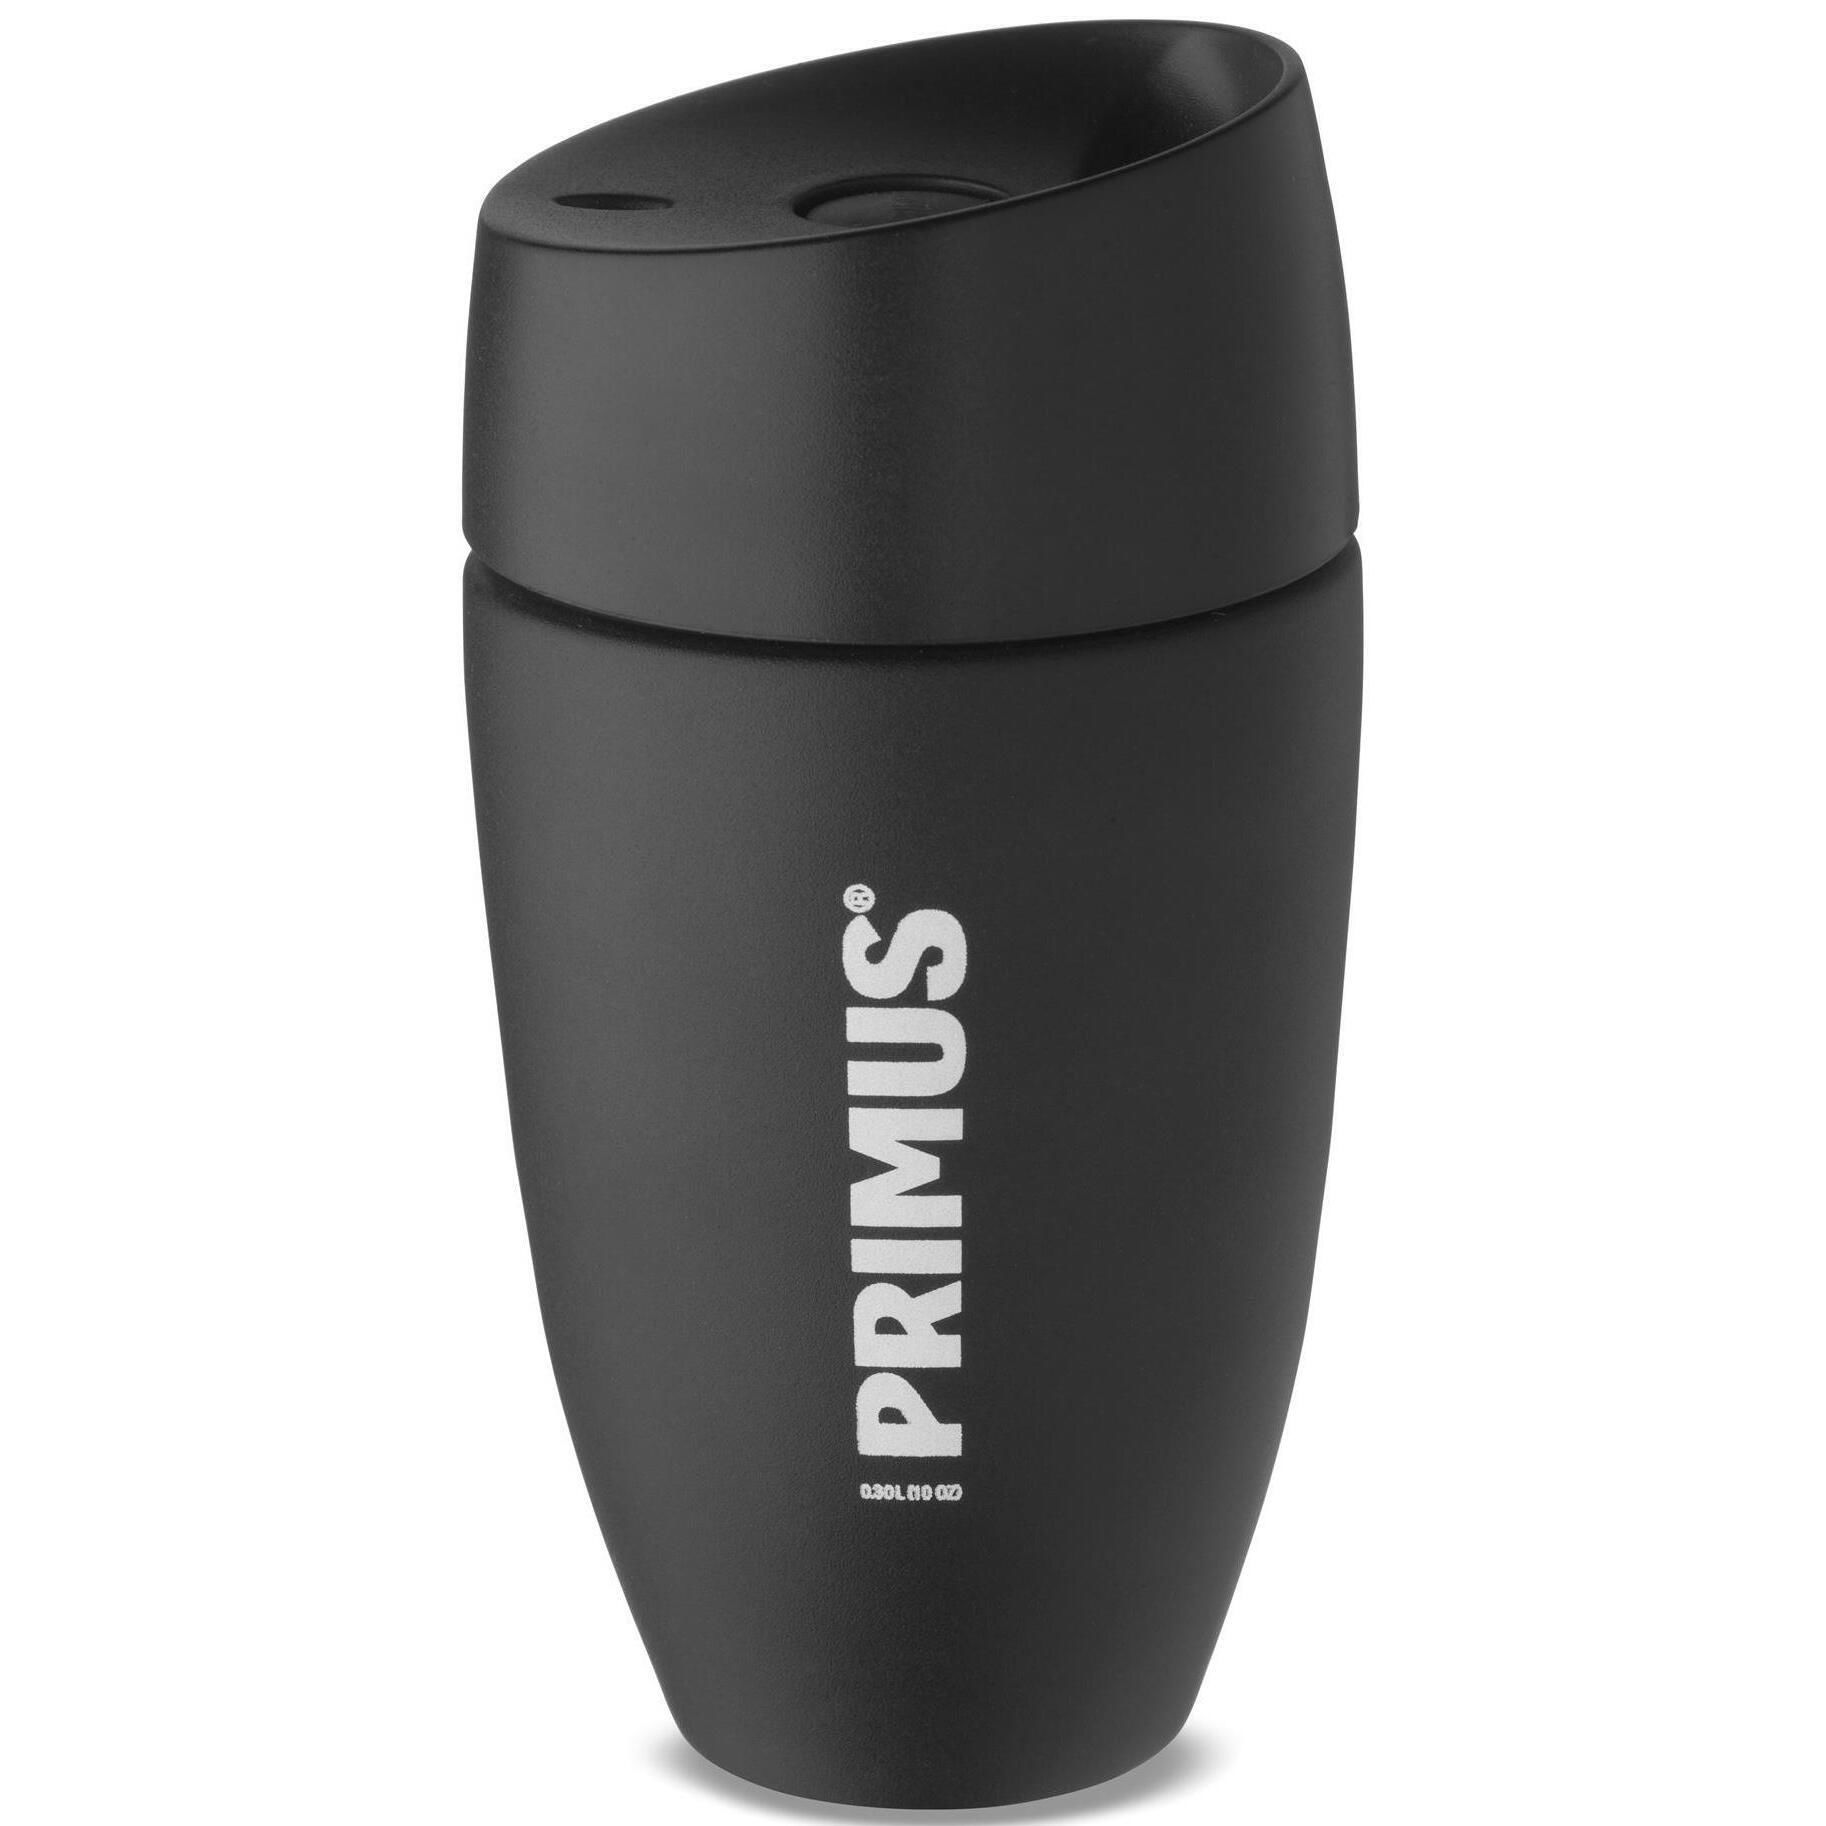  для напитков Primus Commuter Mug 0.3 l Black в наличии  от .